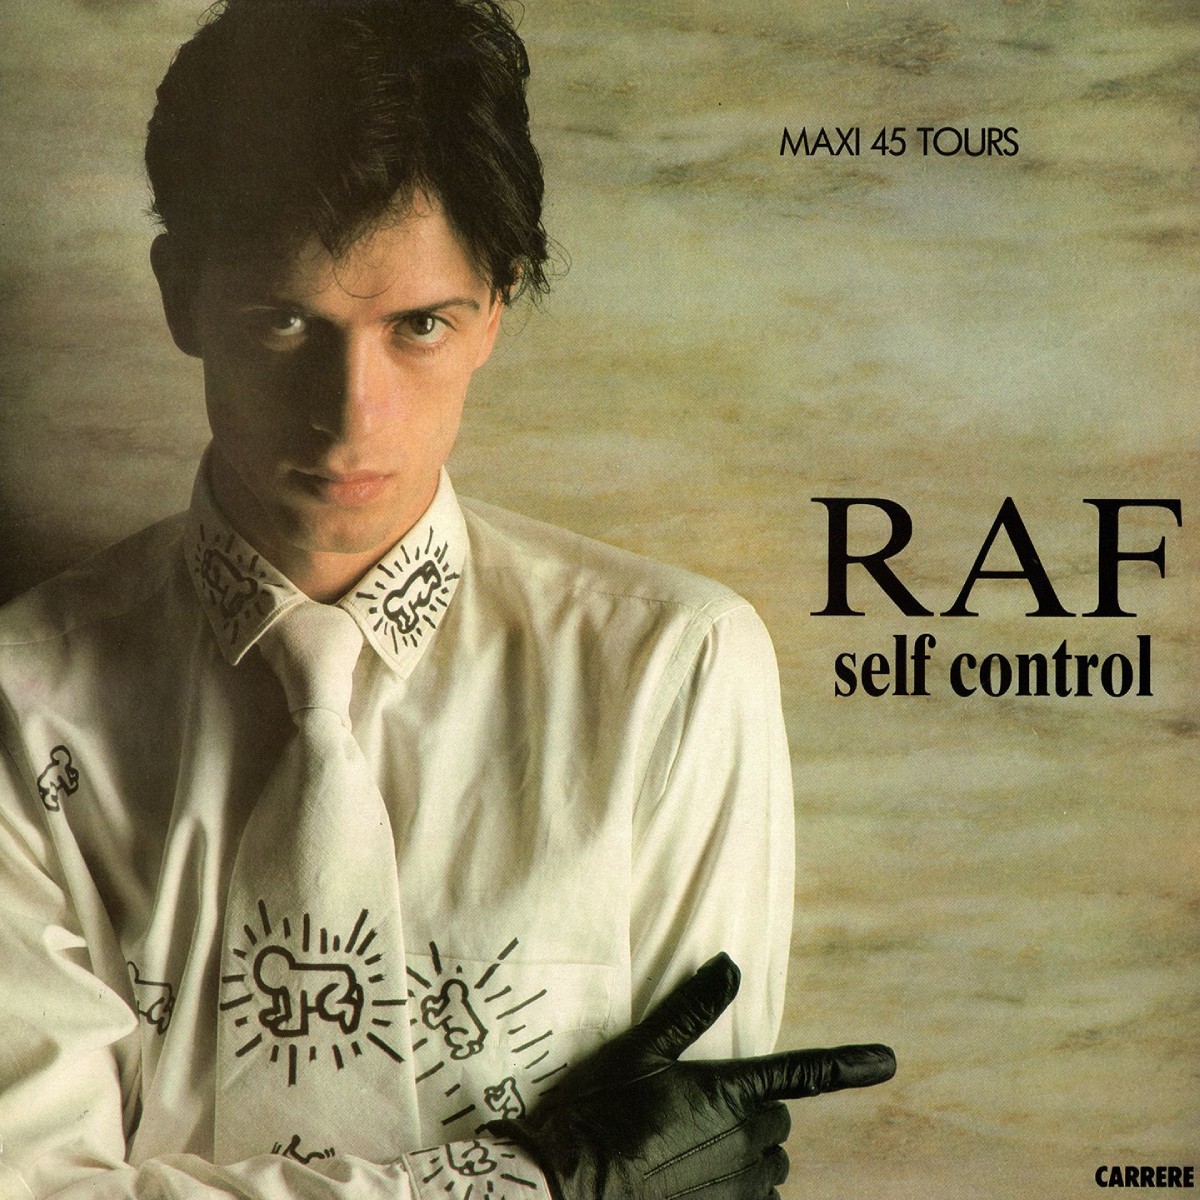 Autocontrole (1984), do artista italiano Rafe